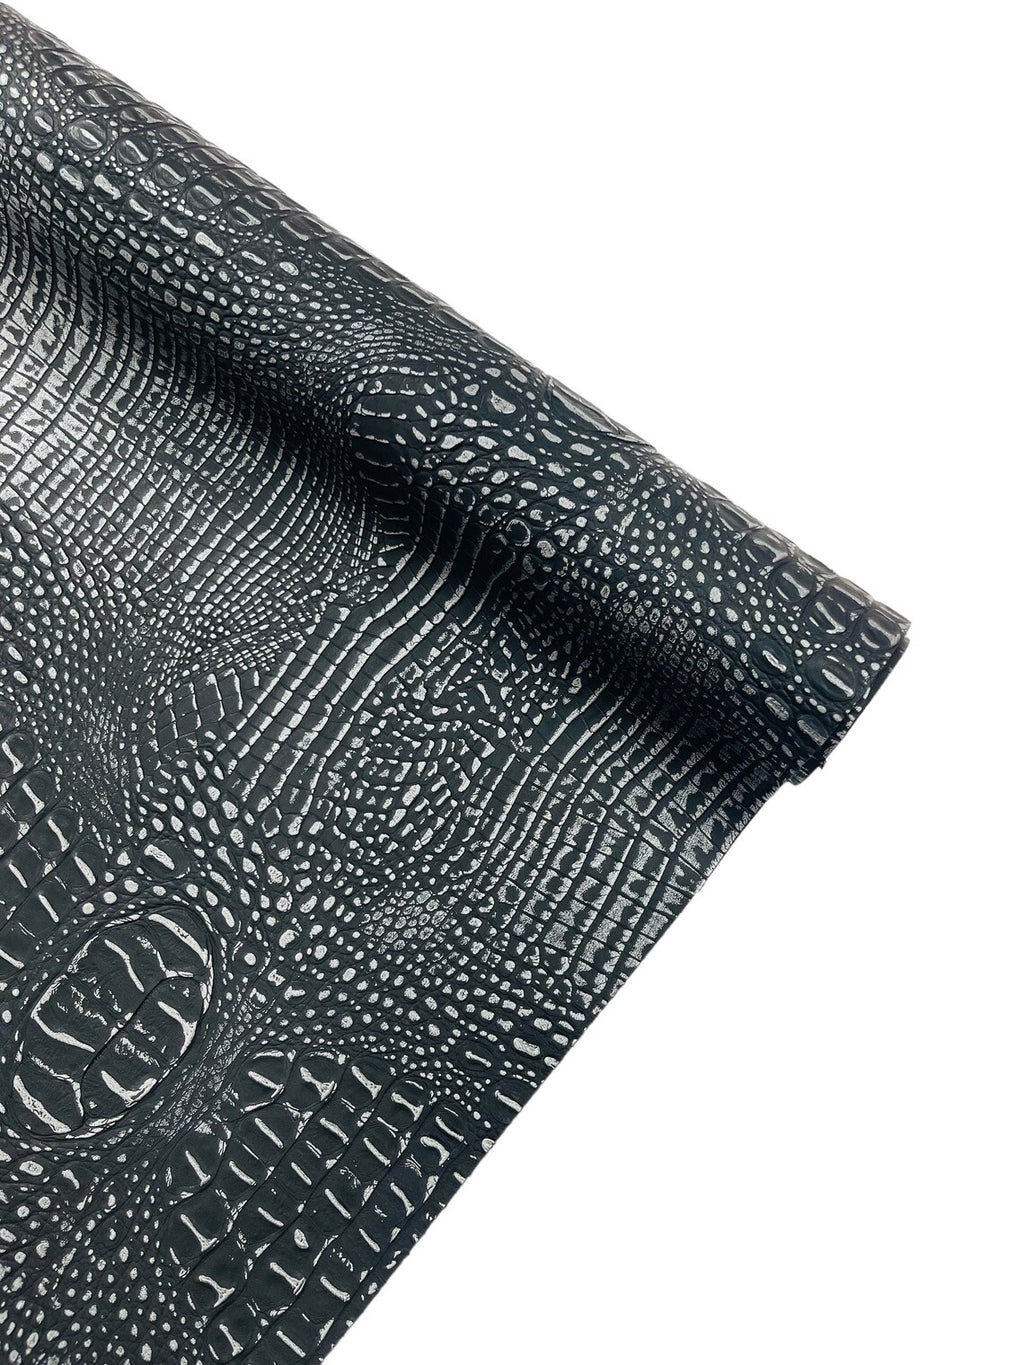 Faux Alligator Print Vinyl Fabric - Black / Silver - Faux Animal Print